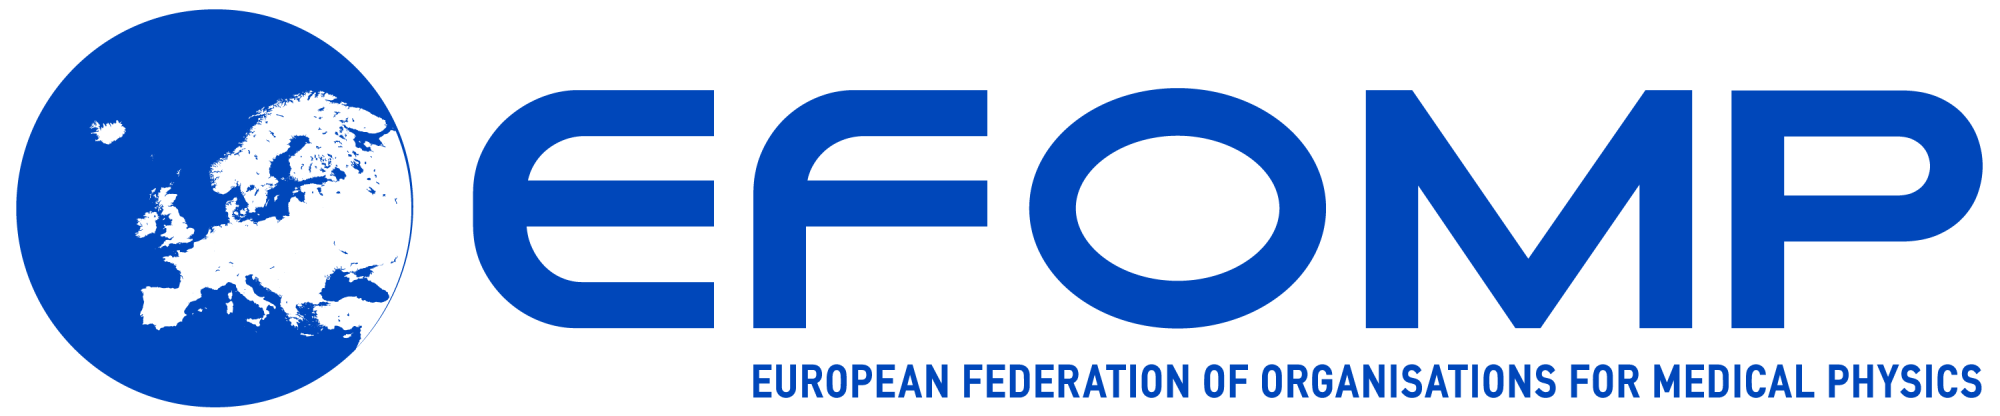 European Federation of Organizations for Medical Physics 